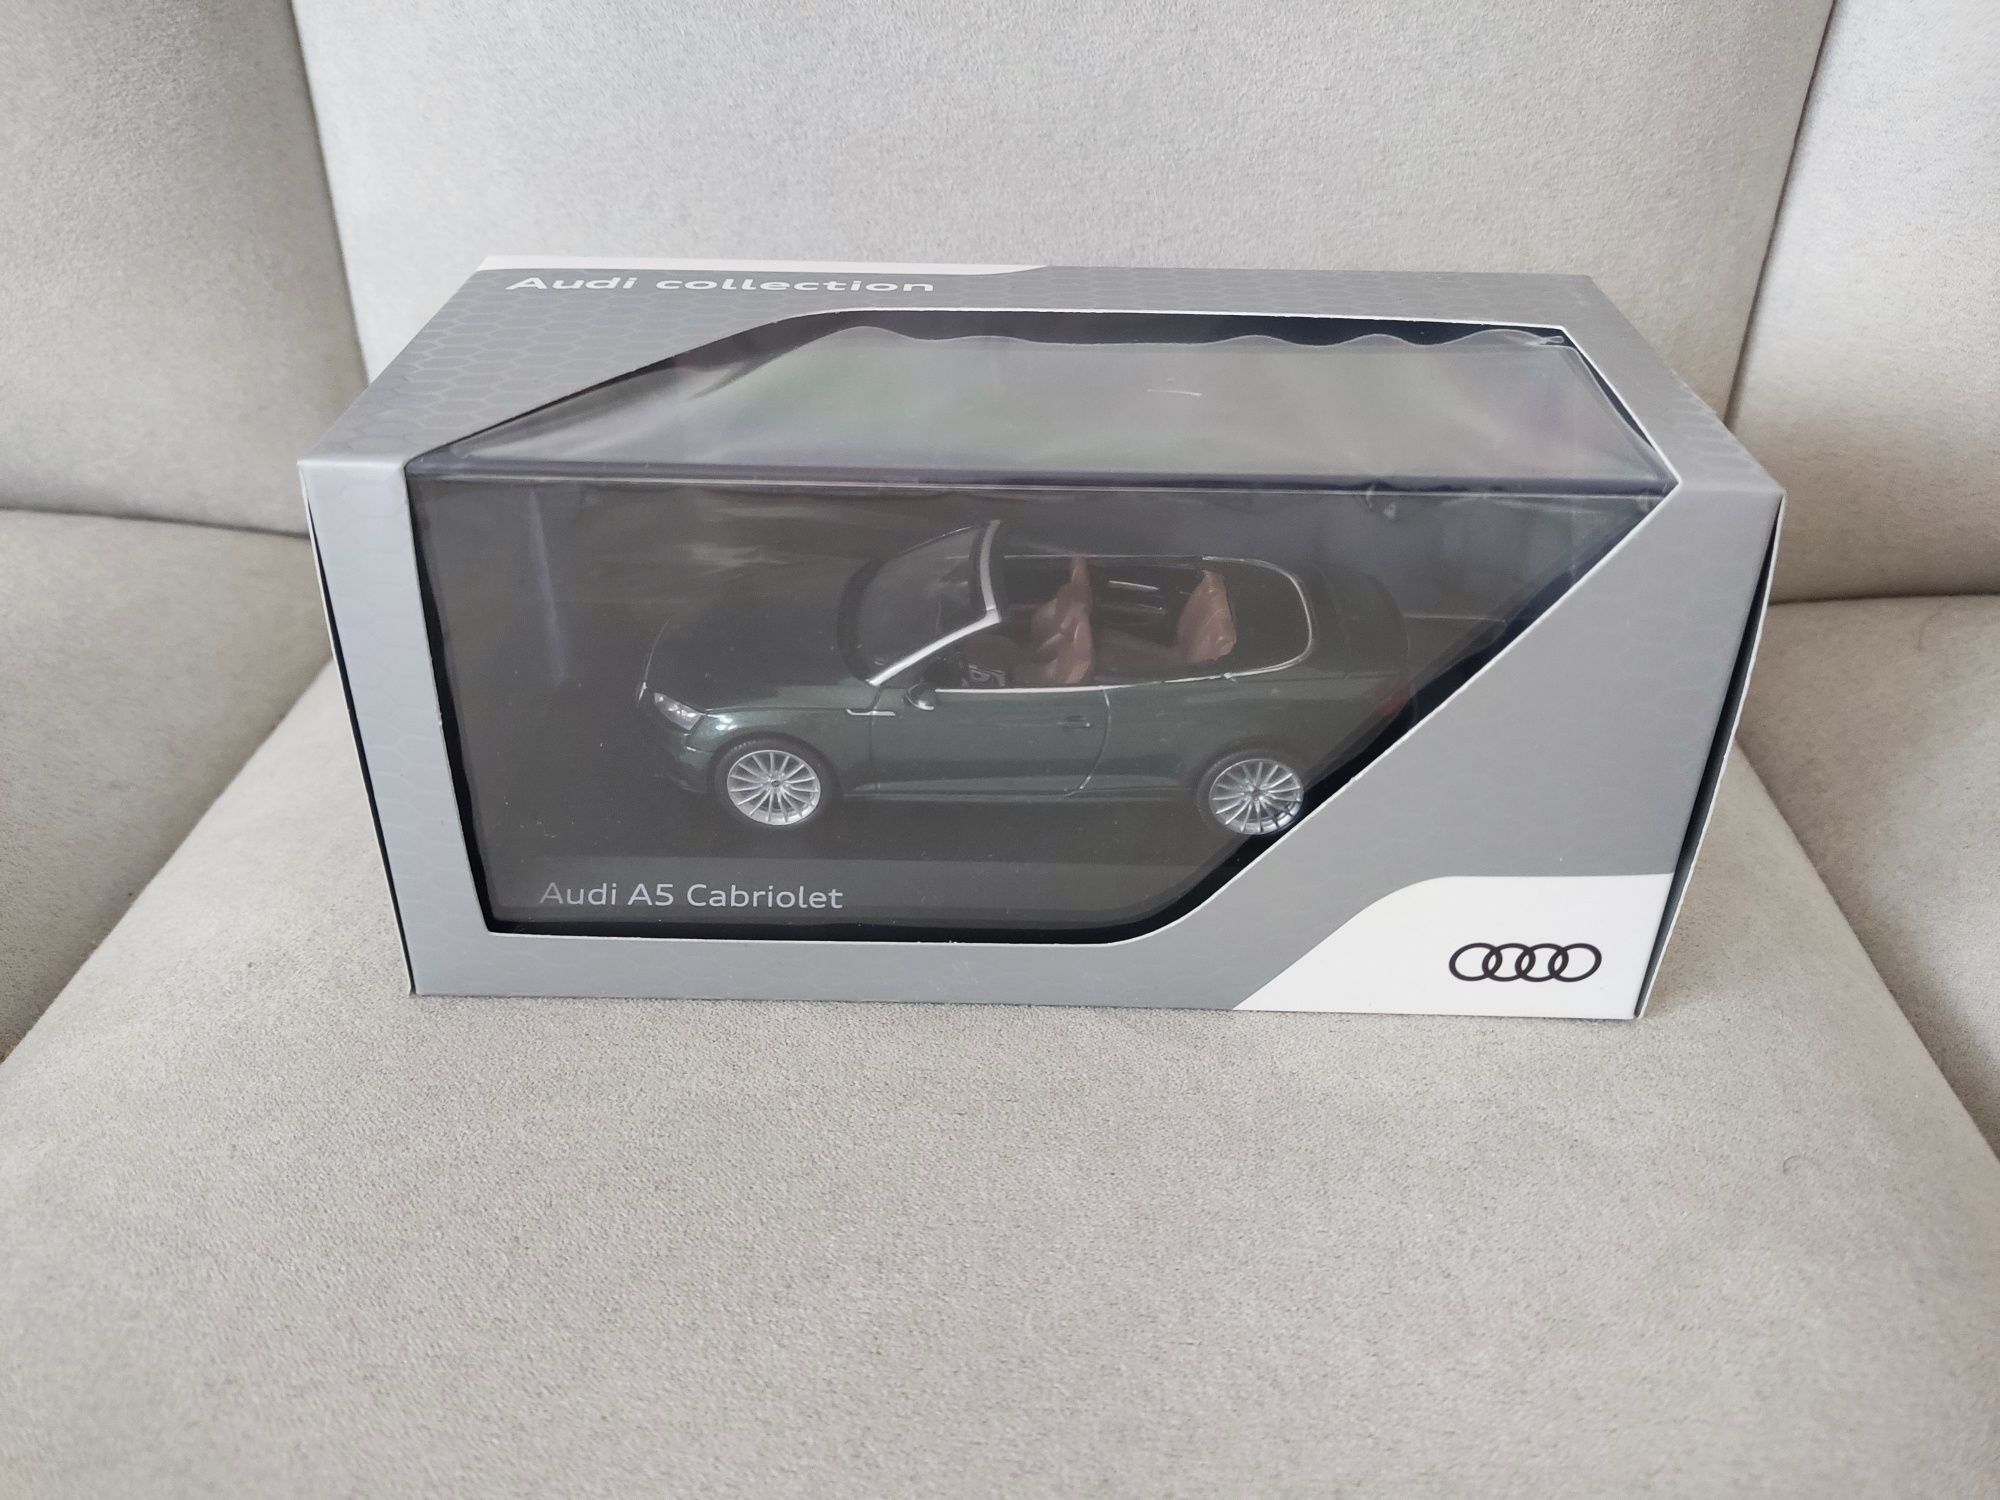 Audi A5 Cabriolet Gotland Green